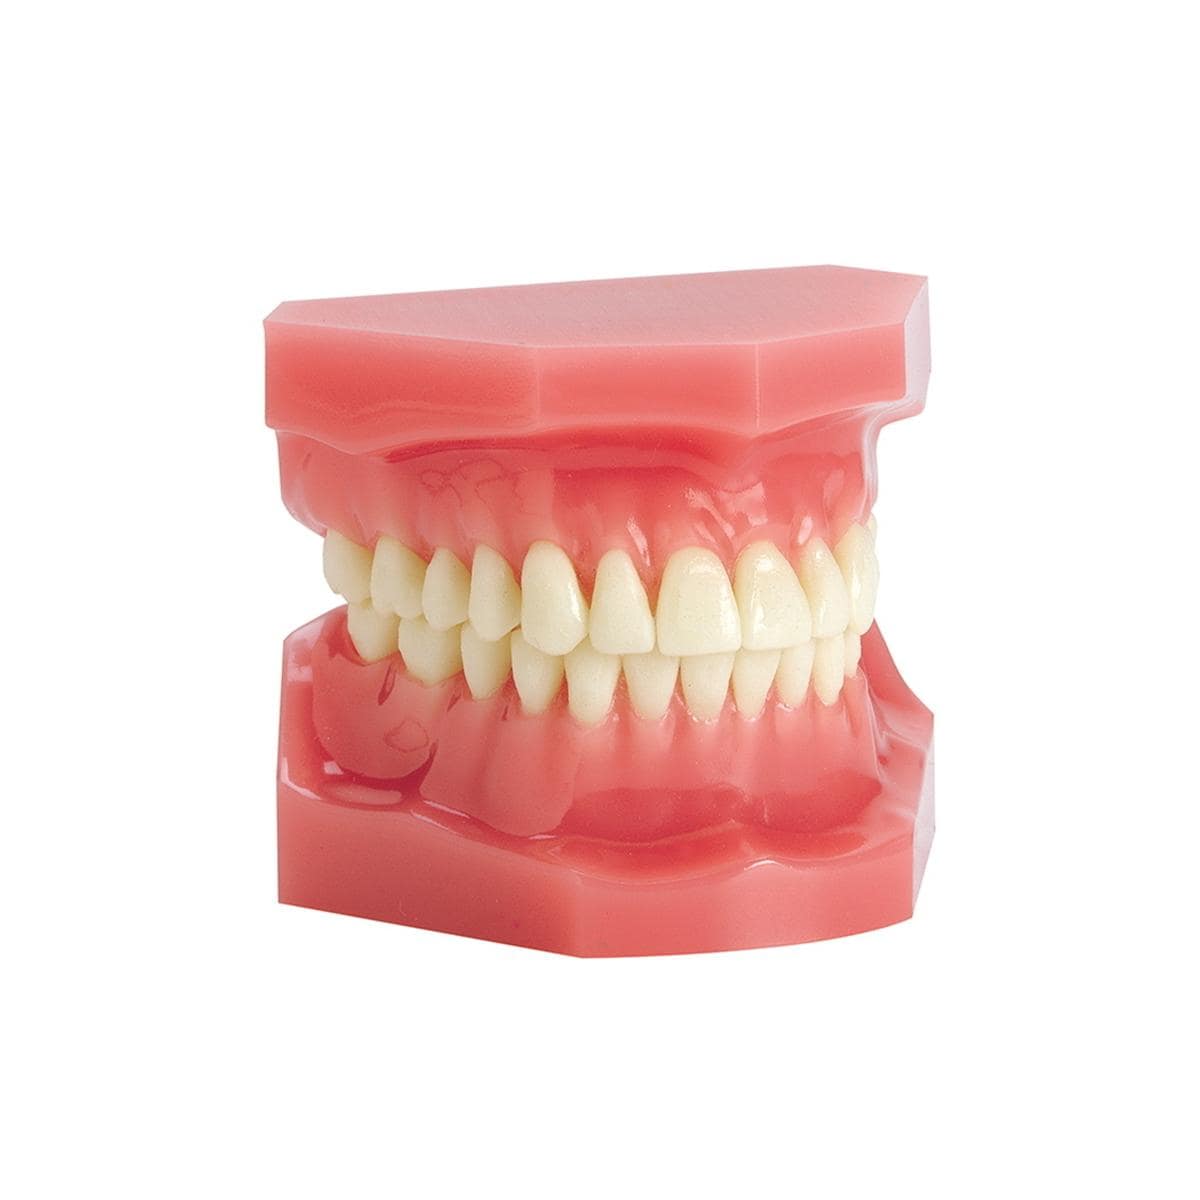 Ortho Technology Typodonten zur Demonstration - Typodont Einfach, Zahnoberfläche beklebbar, Klasse III Dysgnathie